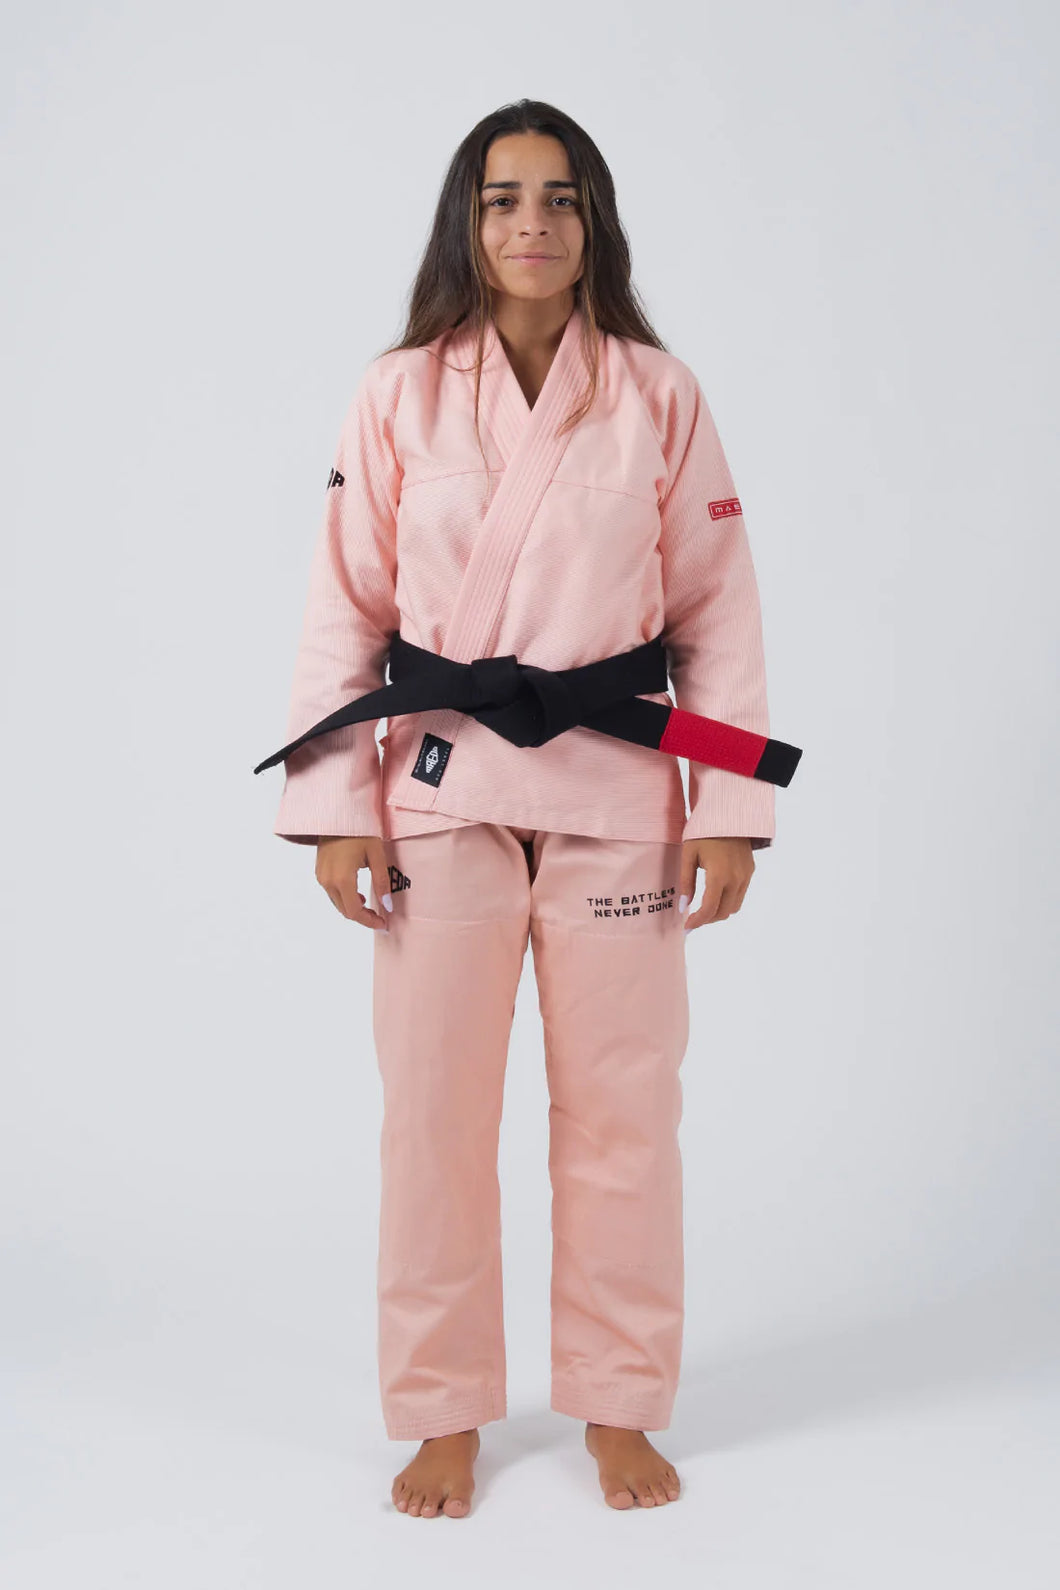 Kimono BJJ (Gi) Maeda Red Label 3.0 Peach para mujer - CINTURÓN BLANCO INCLUIDO